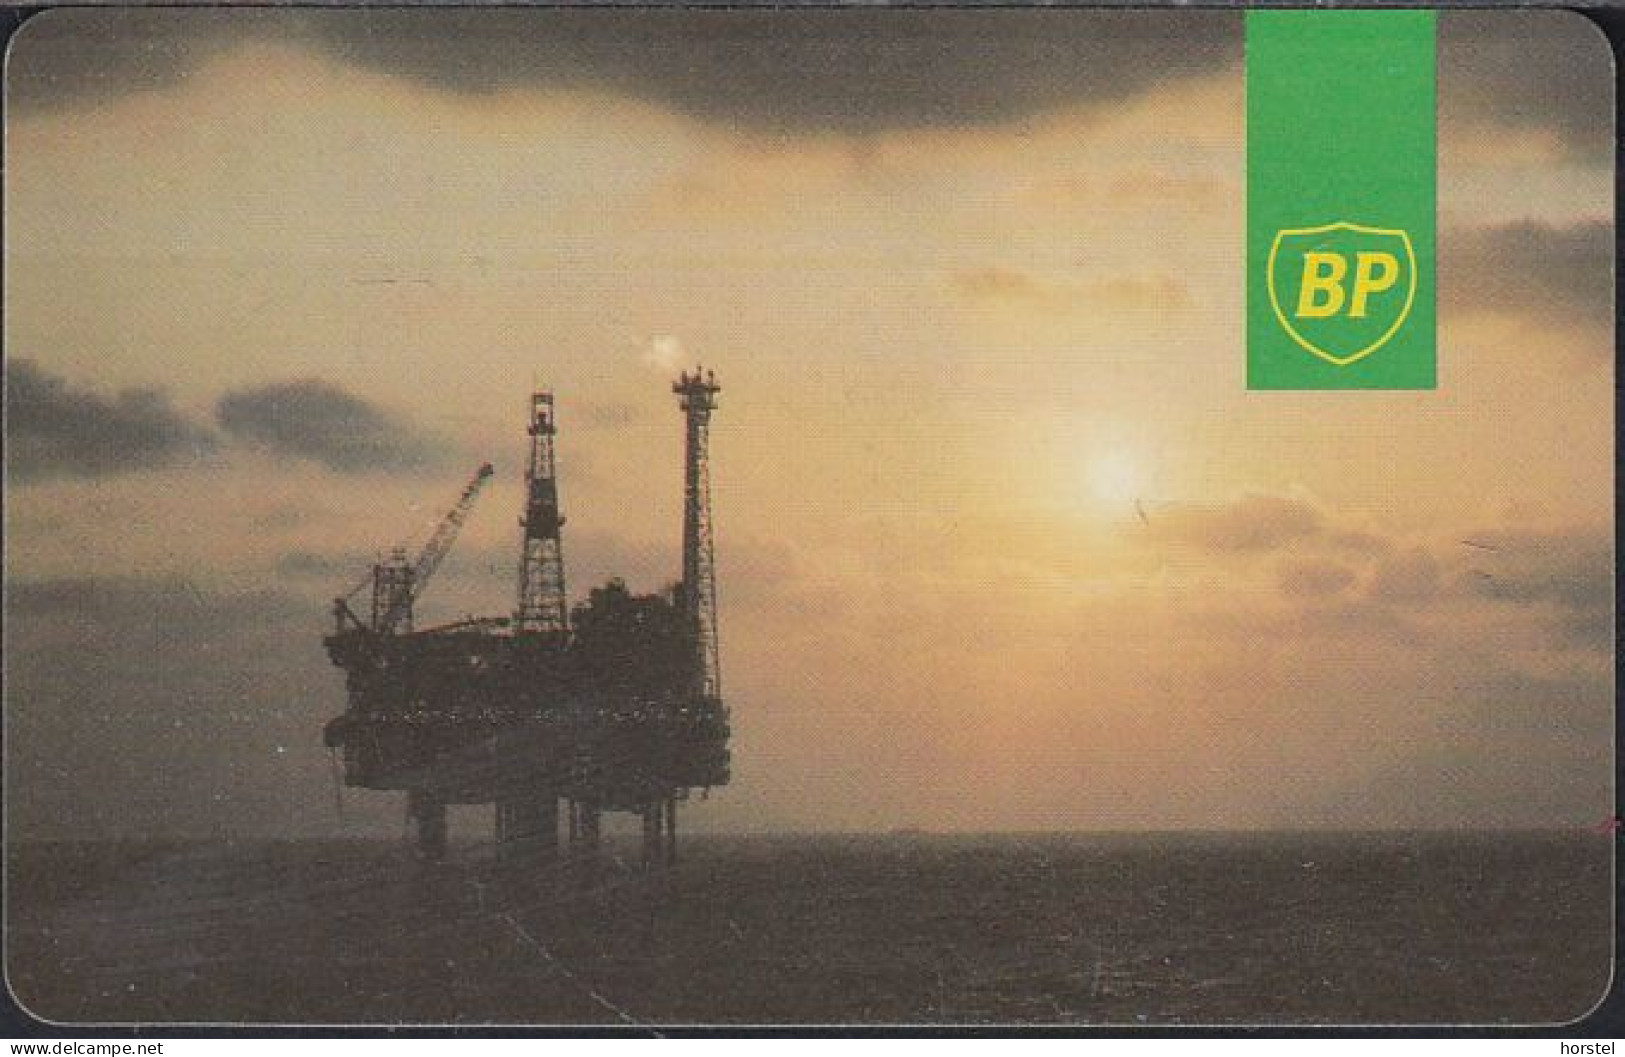 UK - GB-OIL-AUT-0001 Payphone IPL Autelca - BP - Oil Bohrinsel - 20 Units - Mint - [ 2] Erdölplattformen